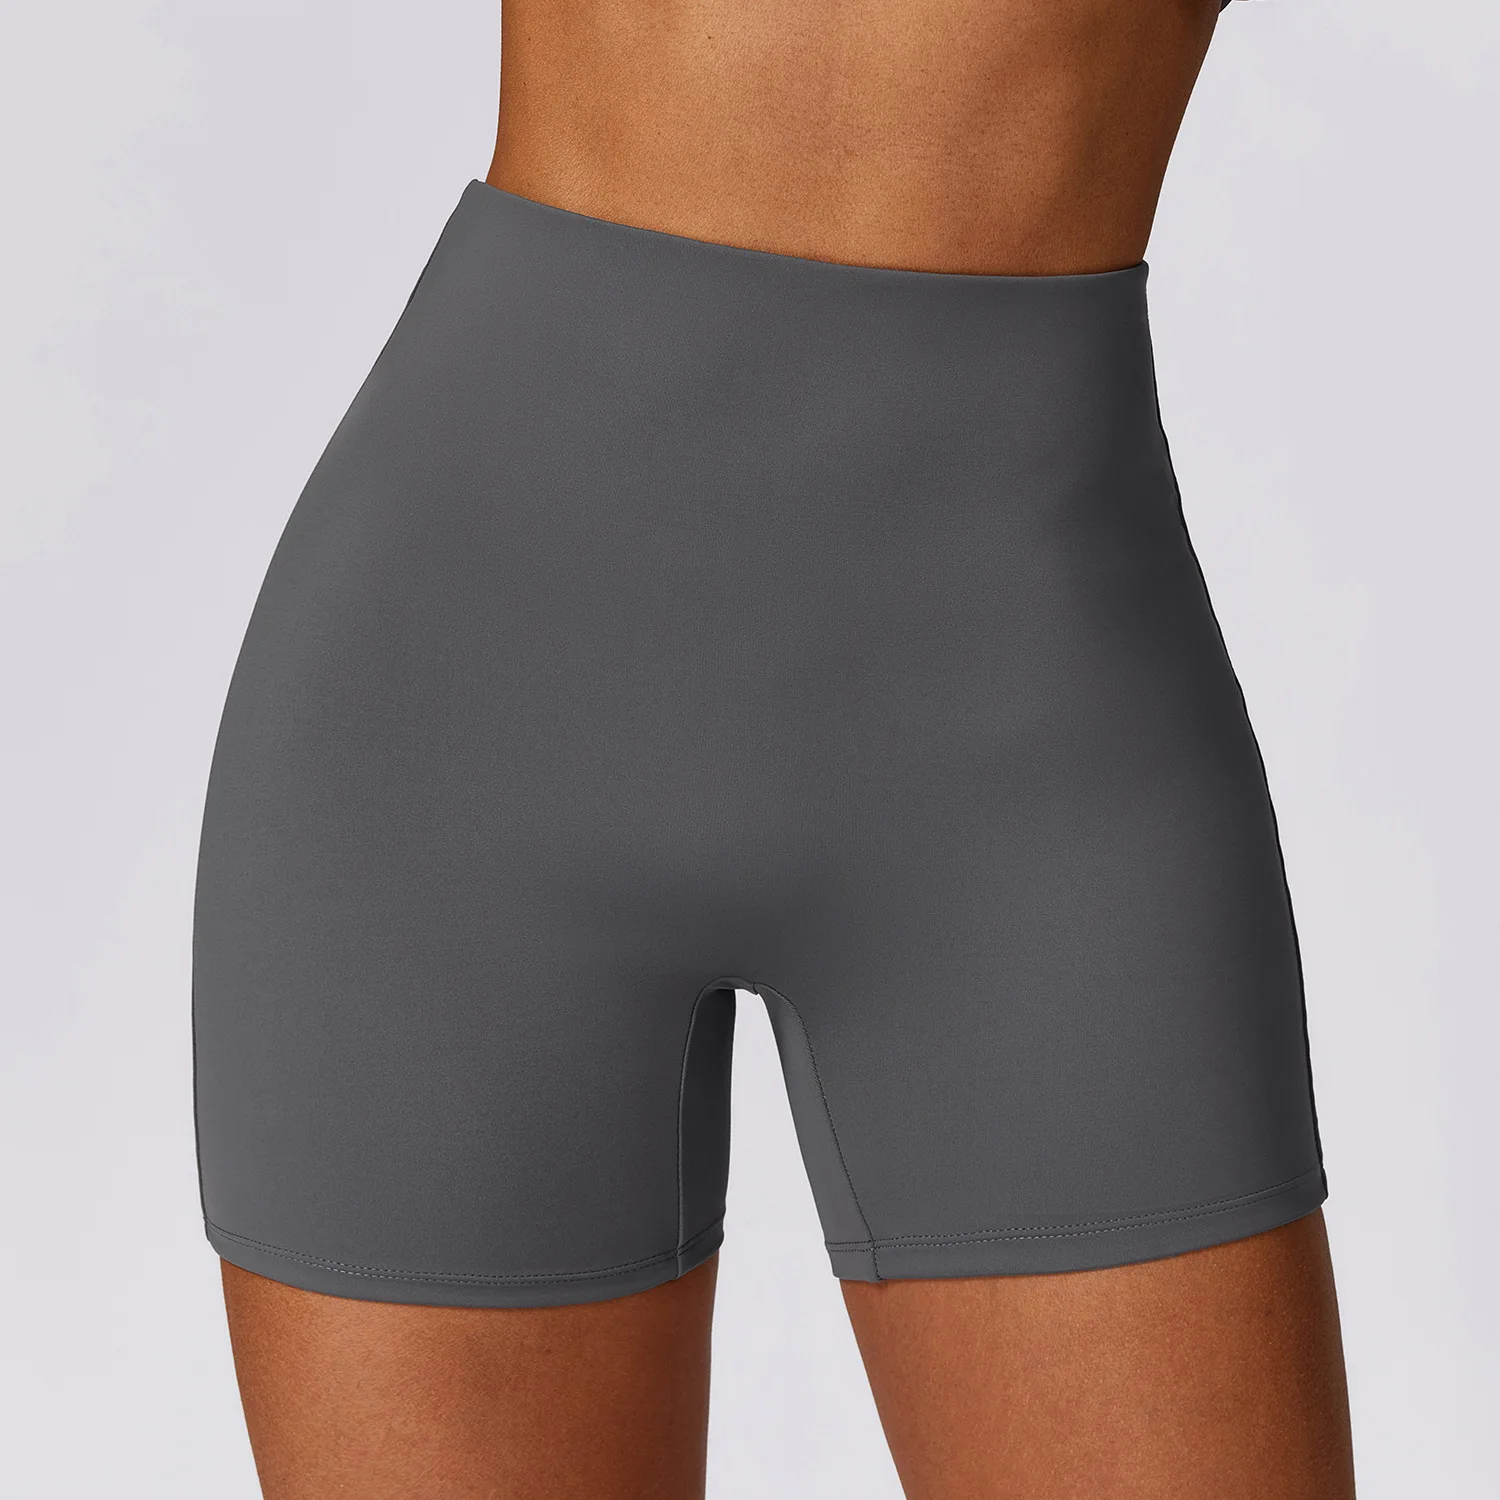 High Waist Yoga Bottom Hip Lift With Pocket Plus Size Fitness Active Sports Gym Sportswear Women Nylon Spandex Yoga Shorts